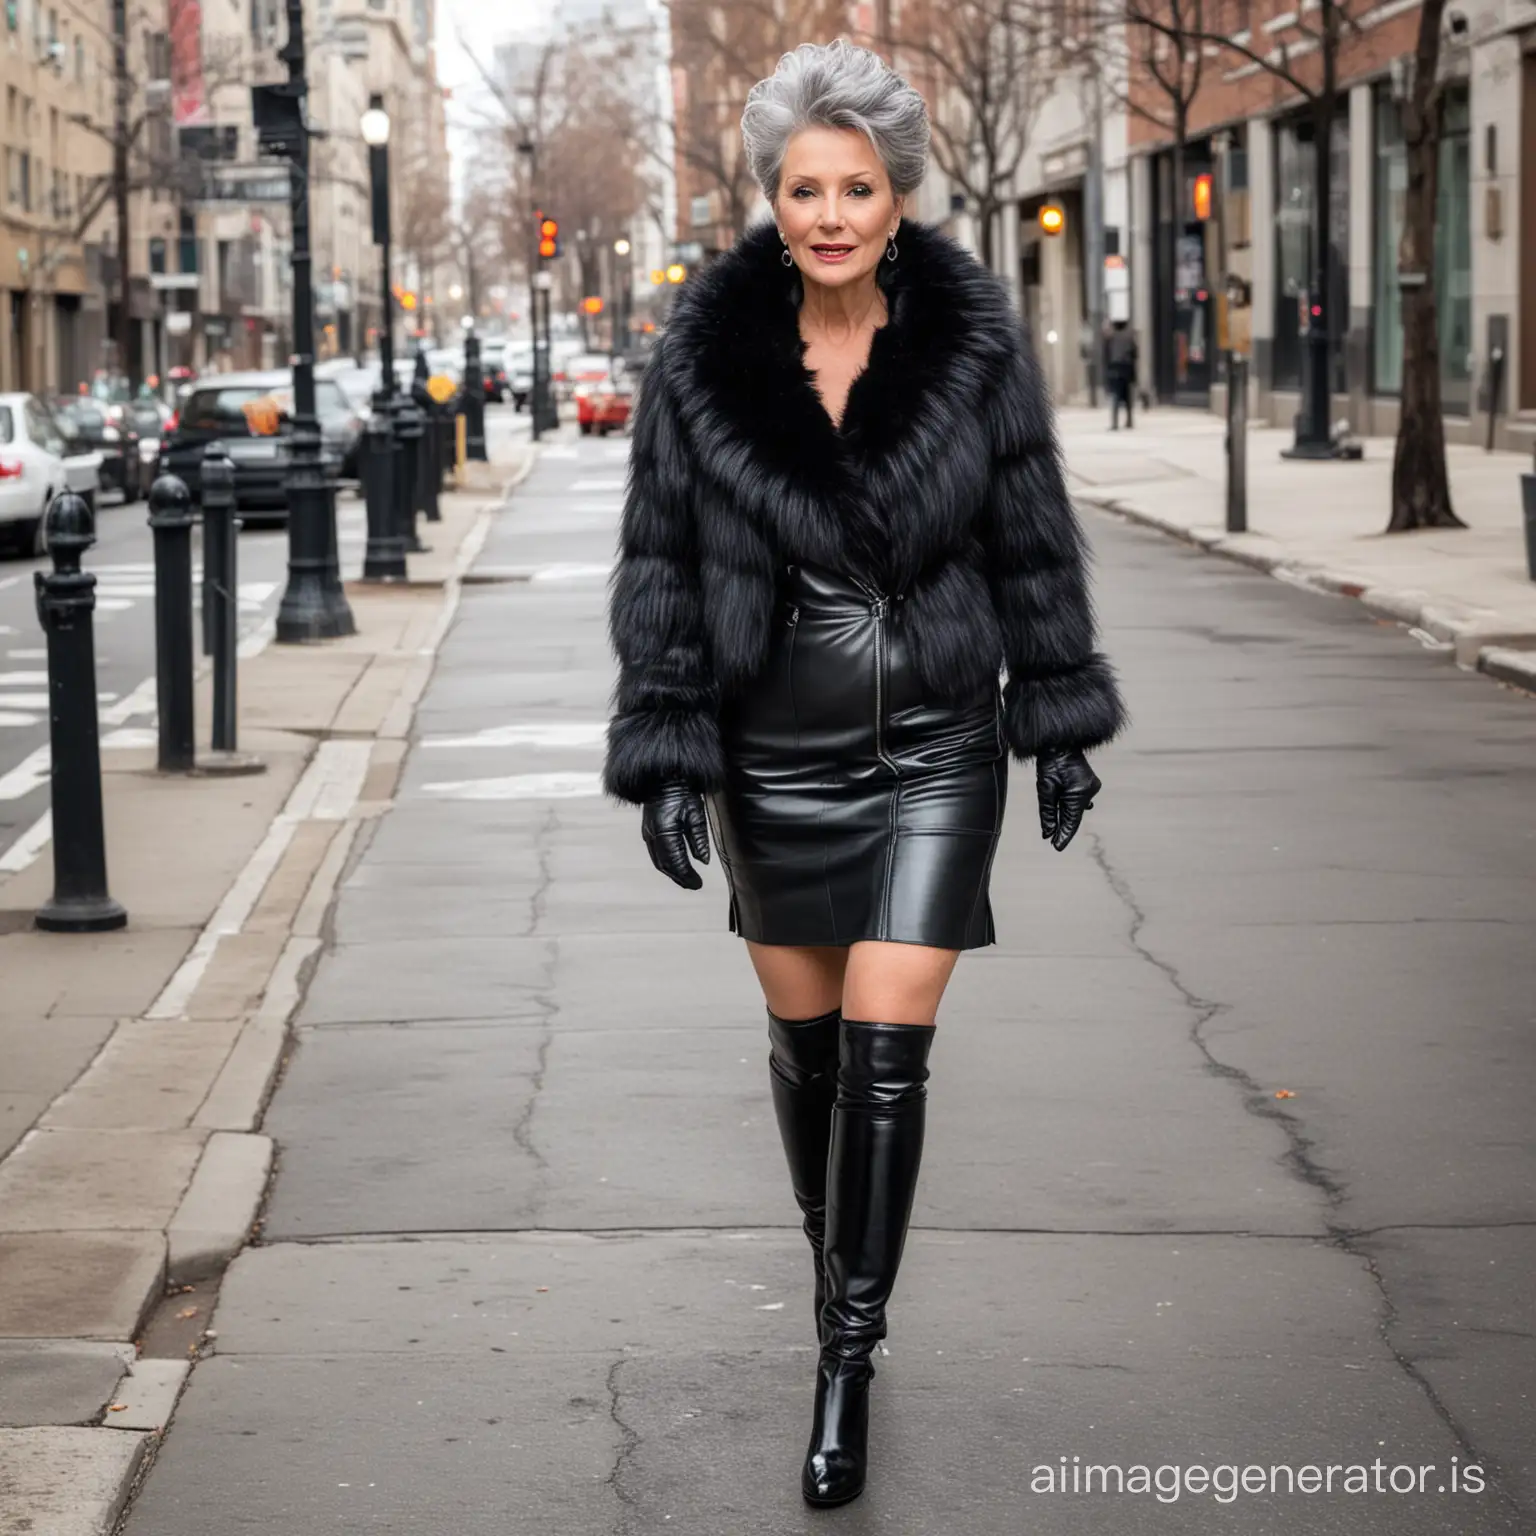 Elegant-Mature-Woman-Strolling-in-City-Fashionable-Fur-Coat-Leather-Ensemble